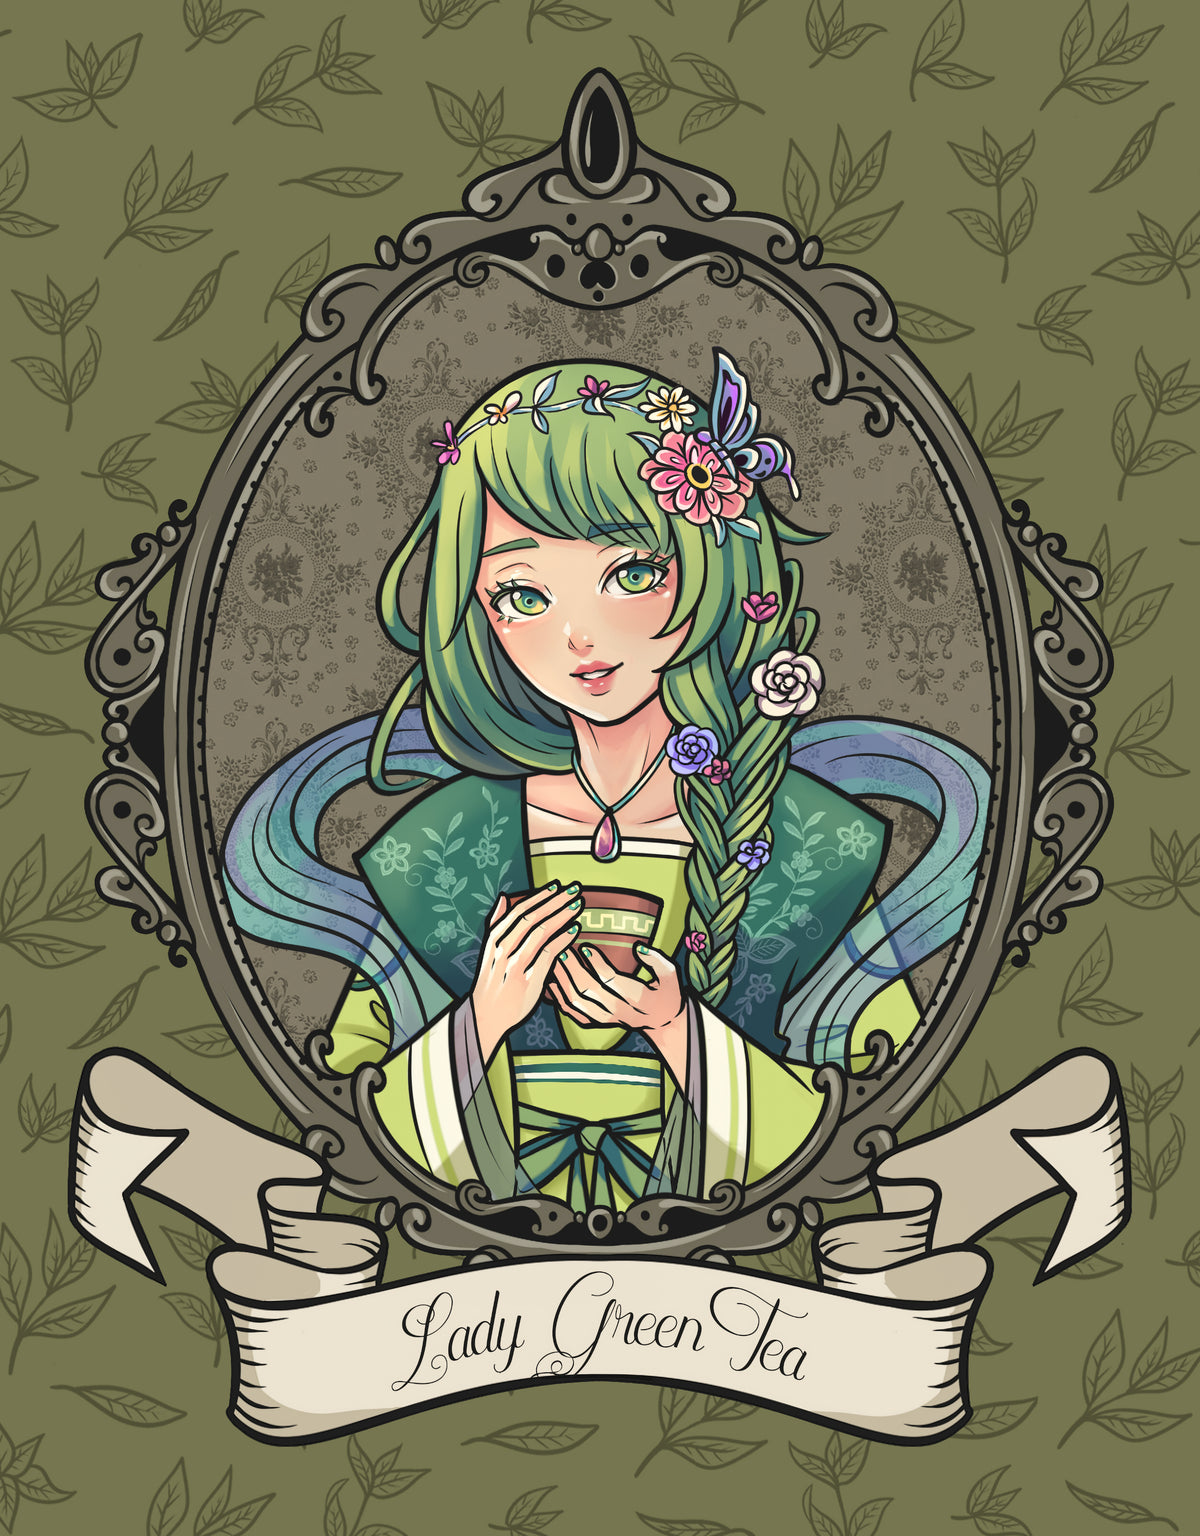 Lady Green Tea